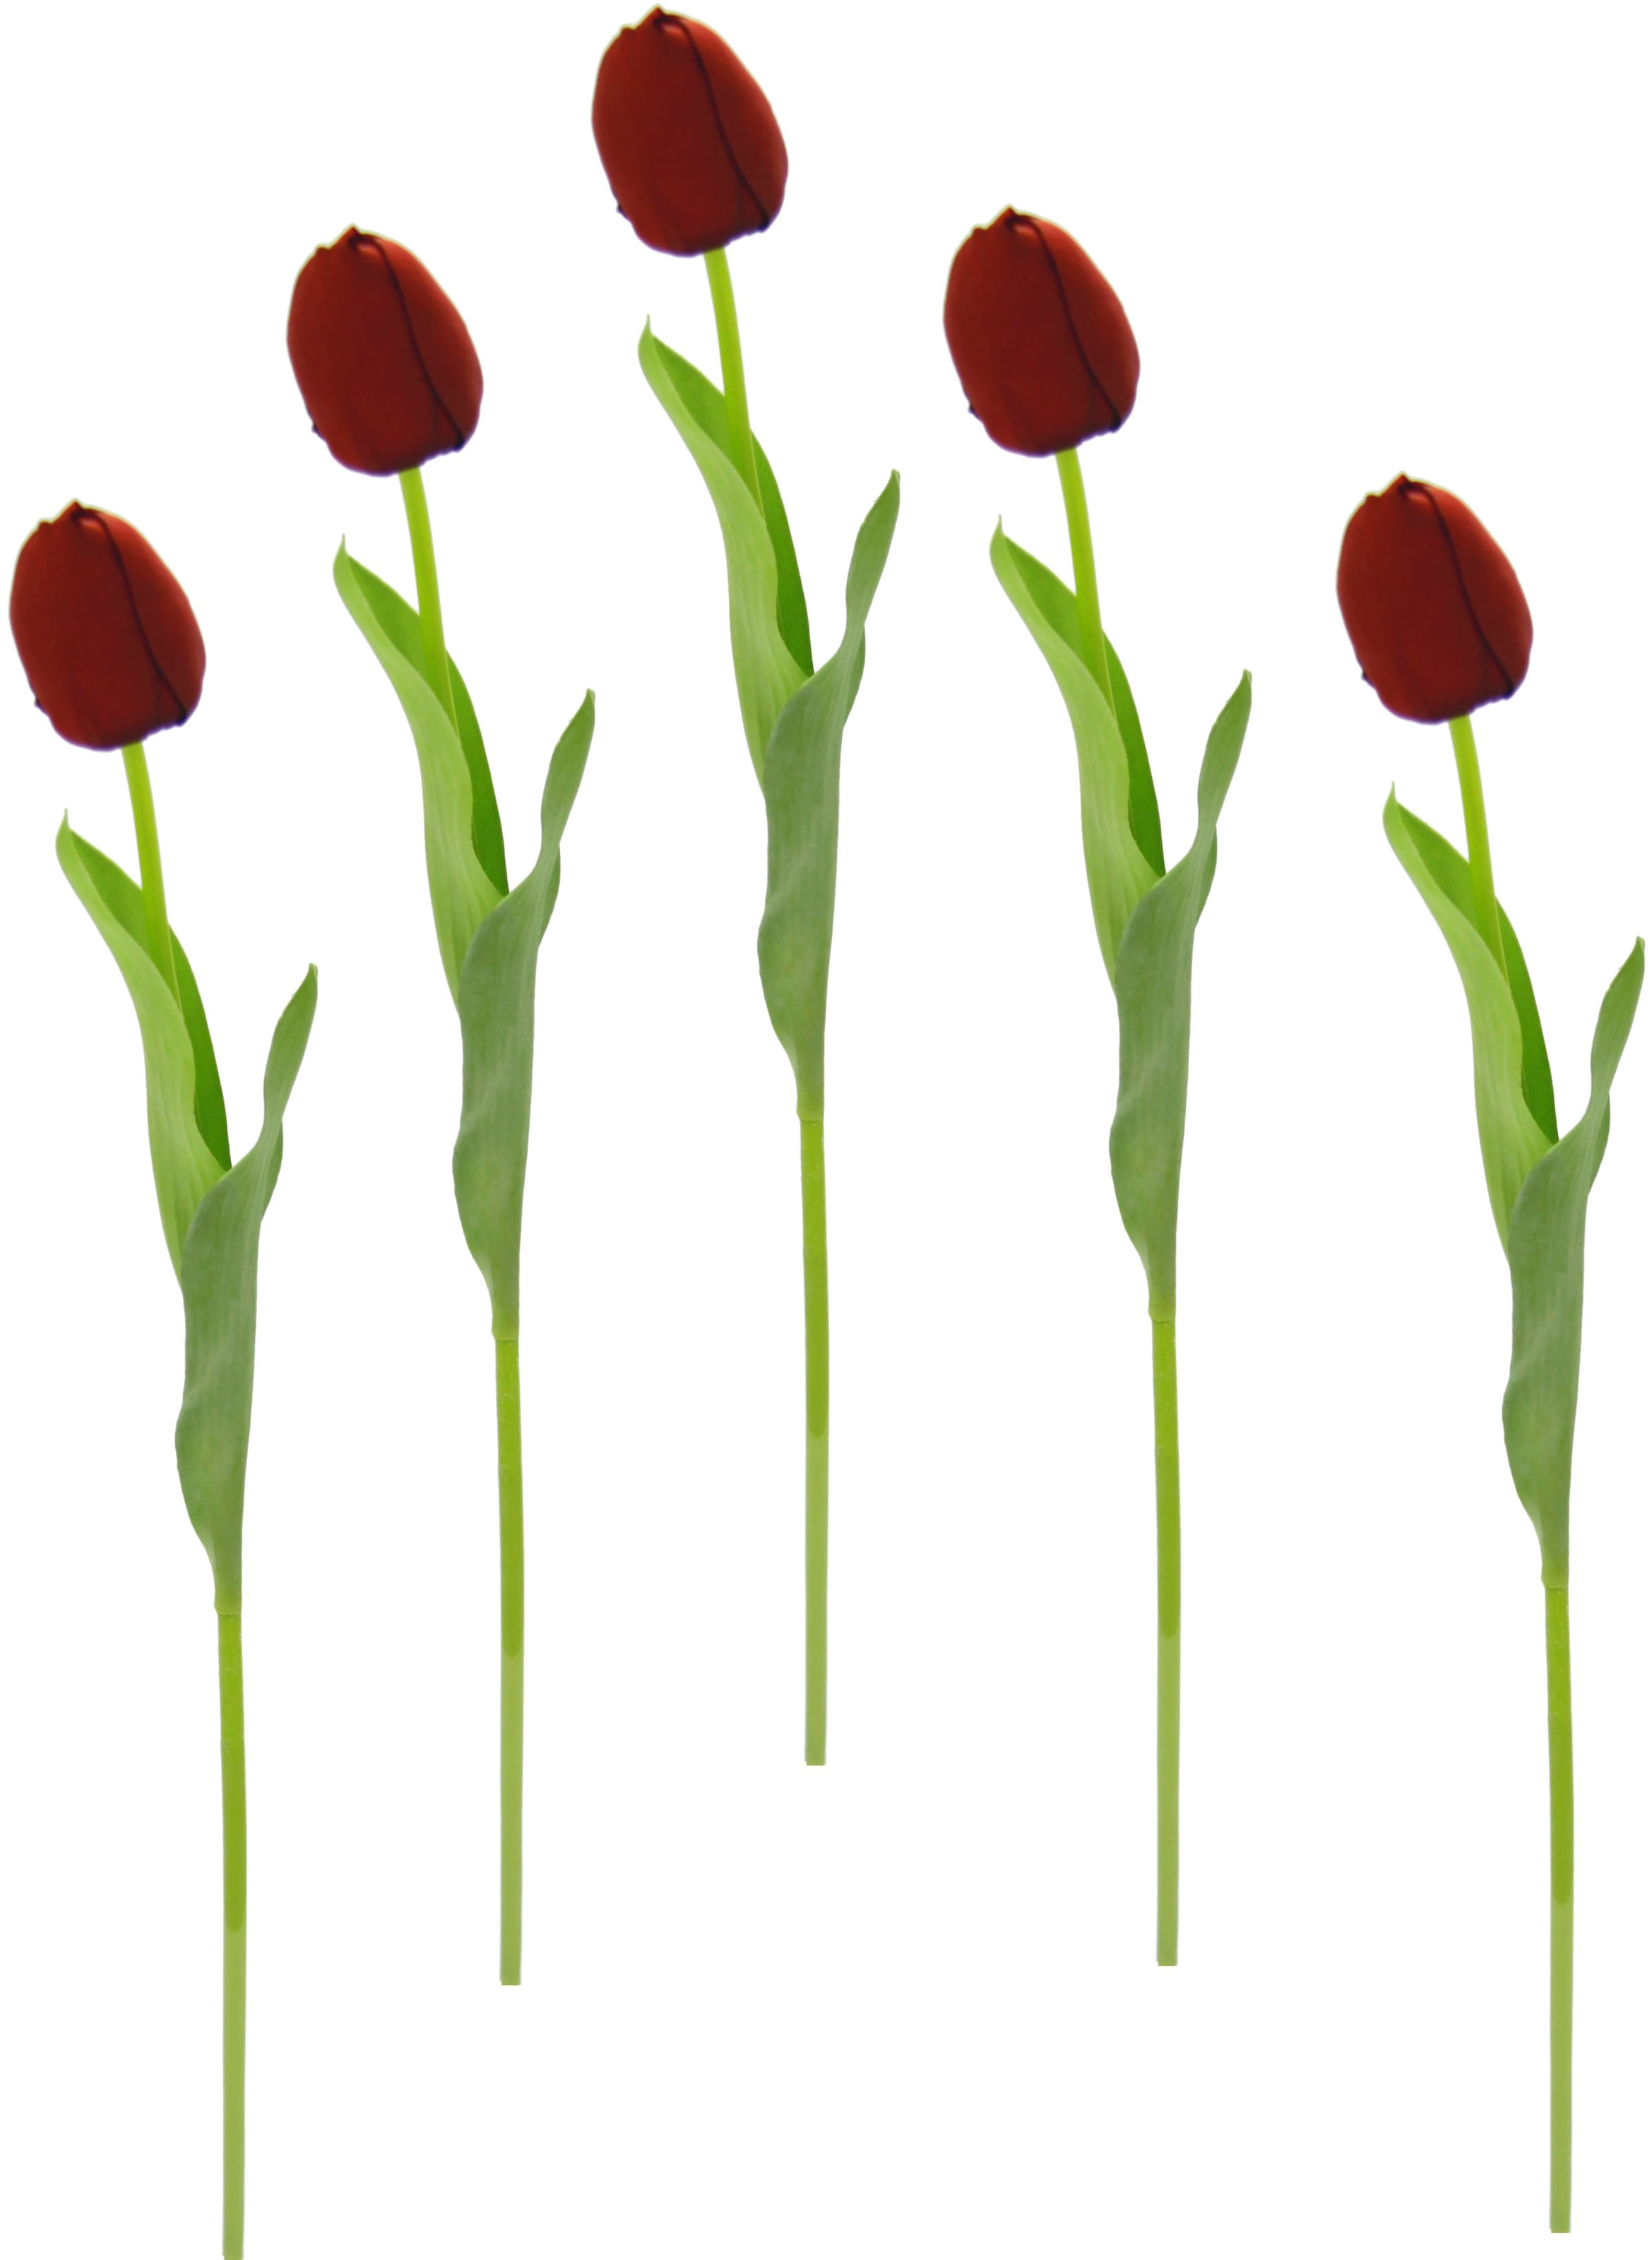 kaufen »Real Tulpenknospen, künstliche Touch I.GE.A. Tulpen«, Kunstblume Set Kunstblumen, jetzt 5er Stielblume